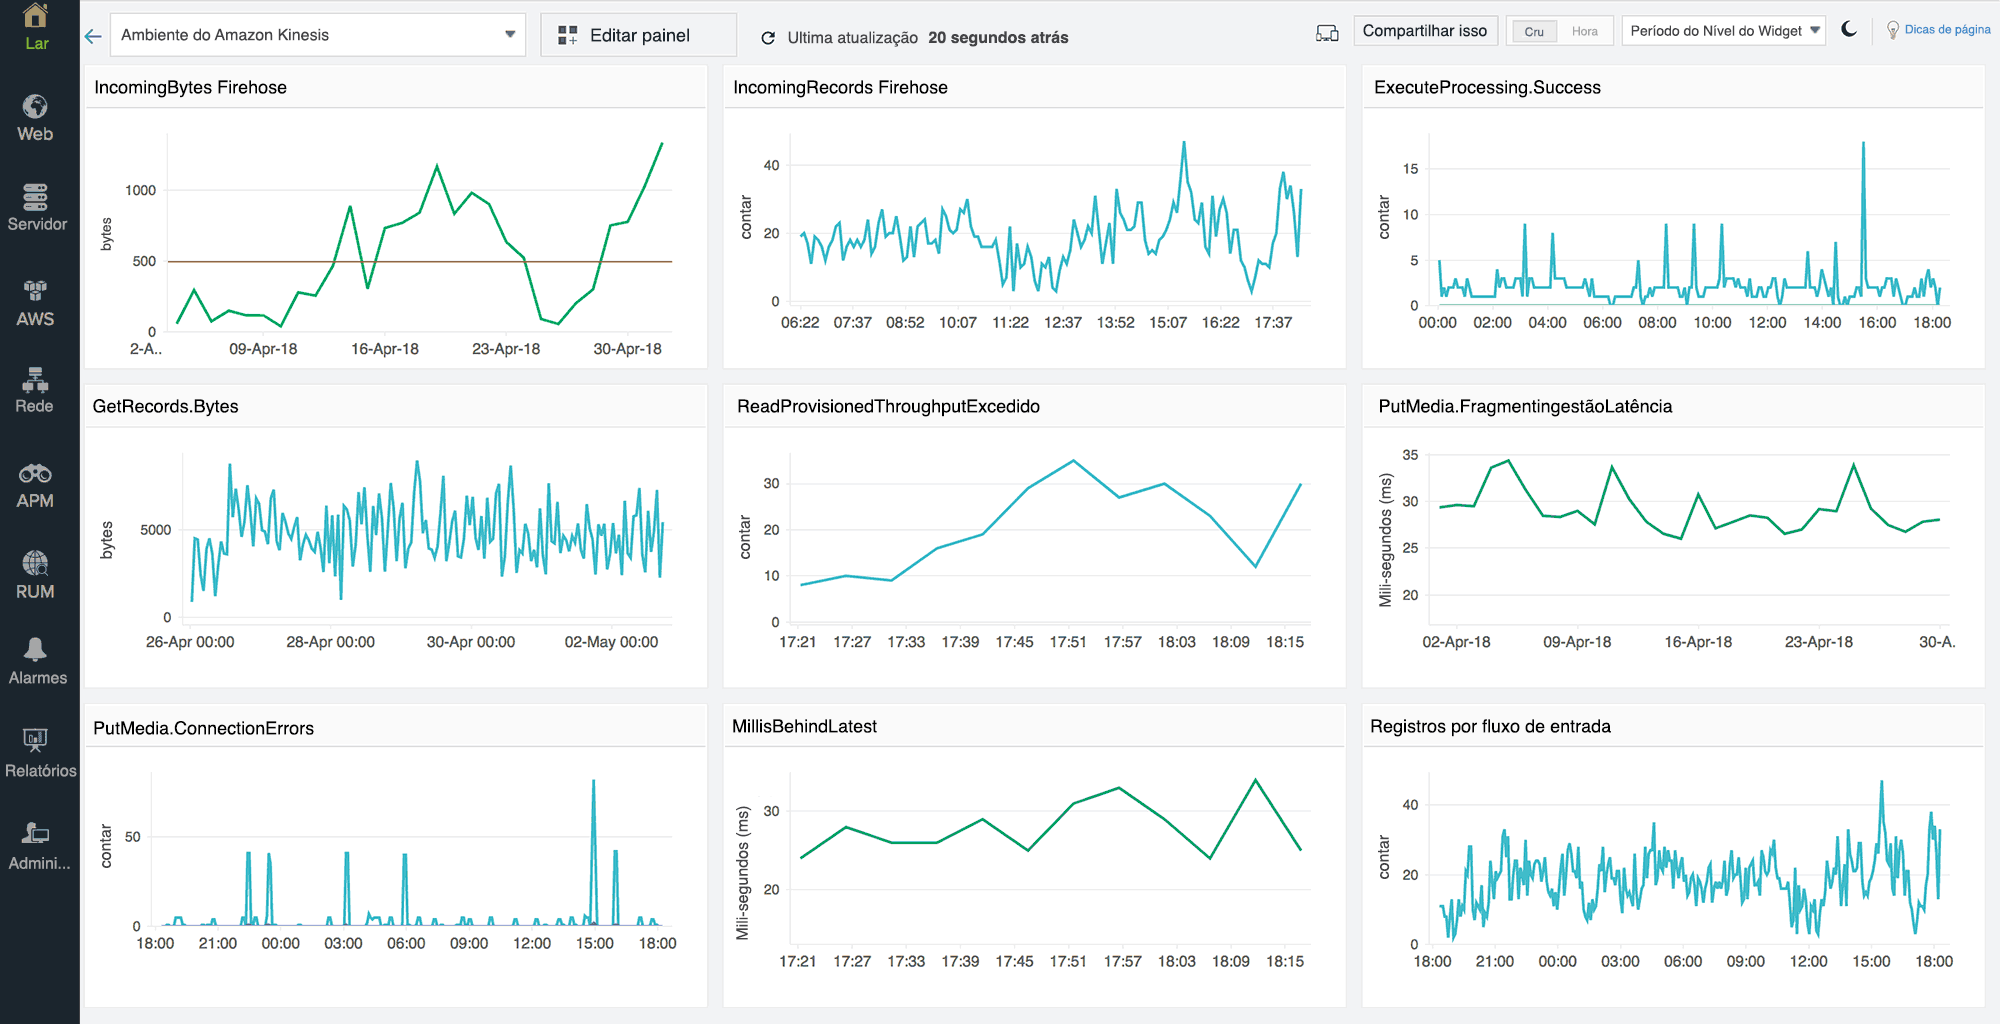 A dashboard displaying multiple time series charts for various Amazon Kinesis metrics